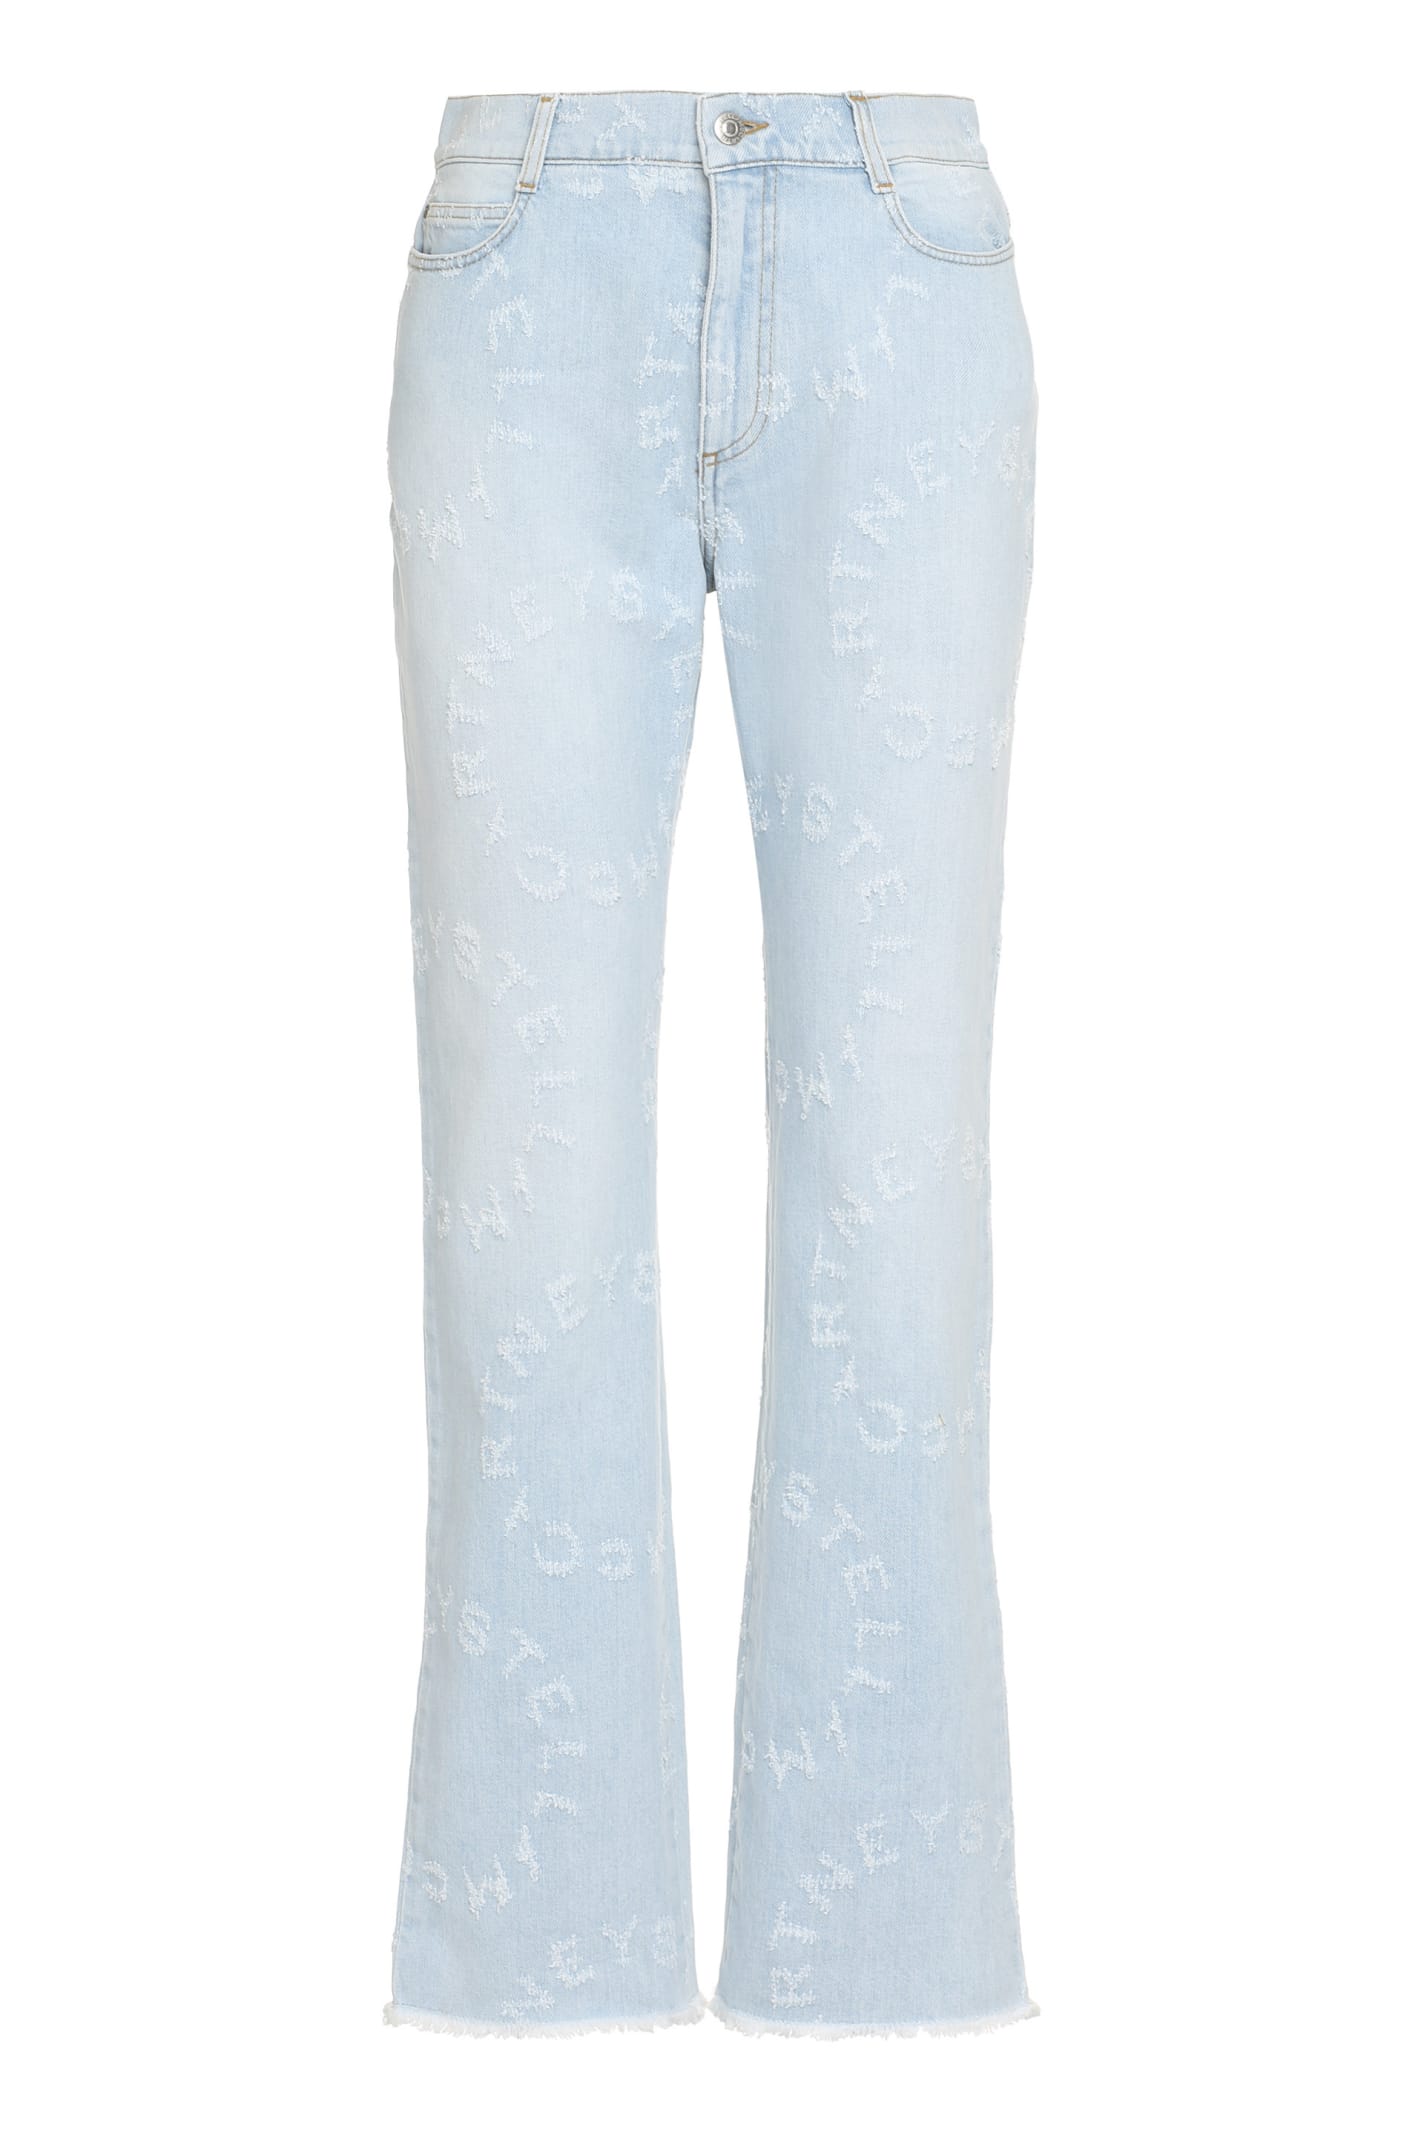 Stella McCartney 5-pocket Jeans